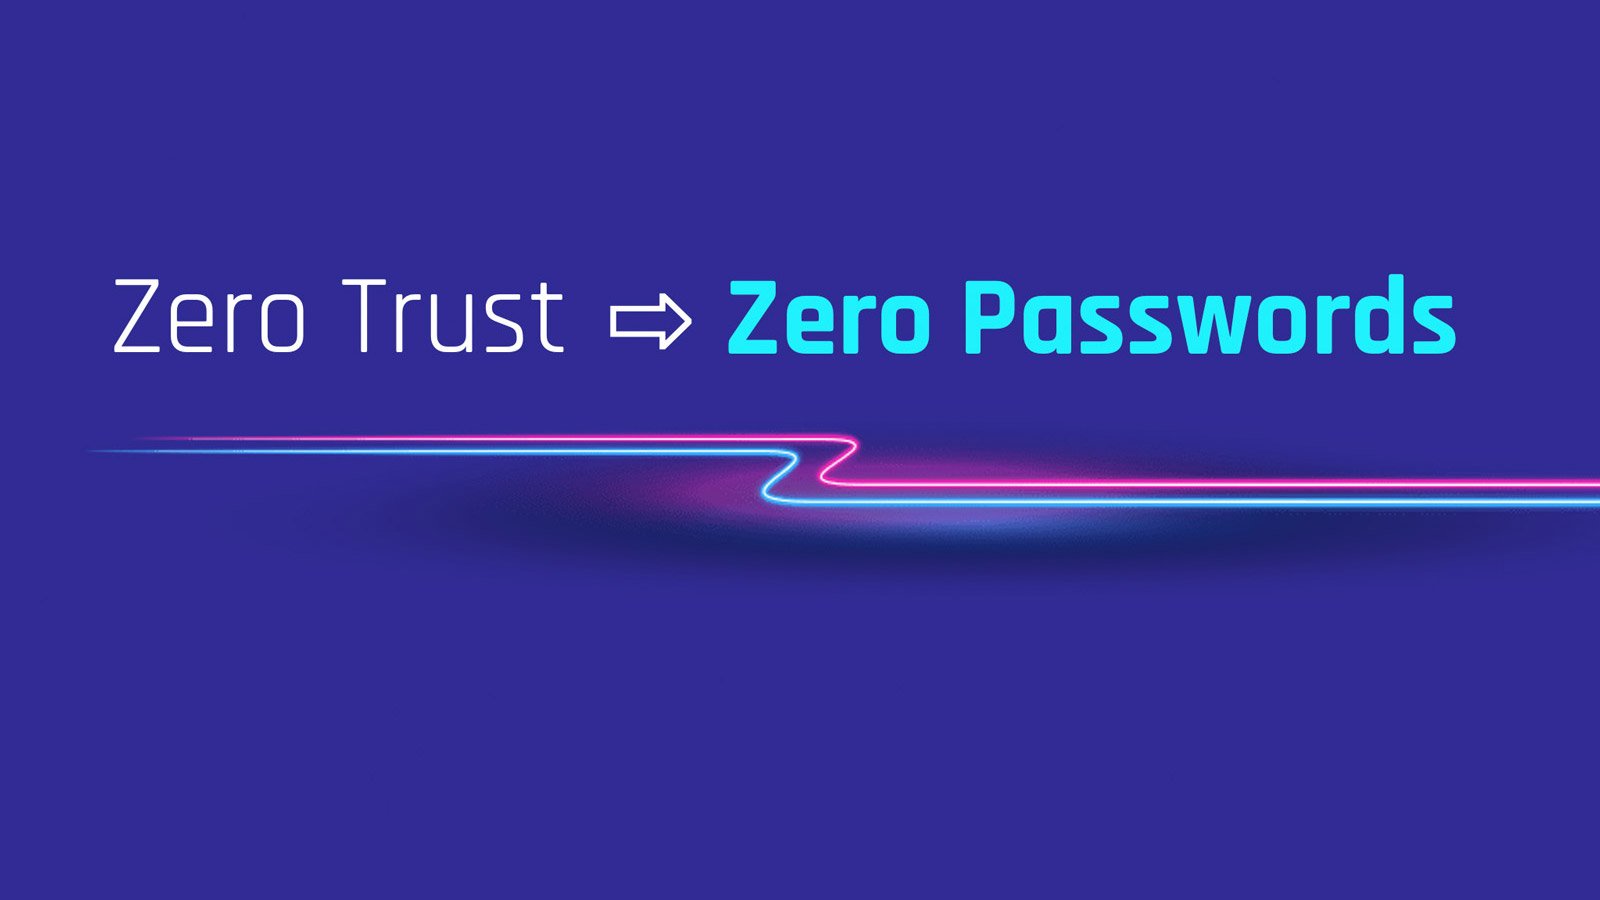 Zero Trust Zero Passwords video thumbnail